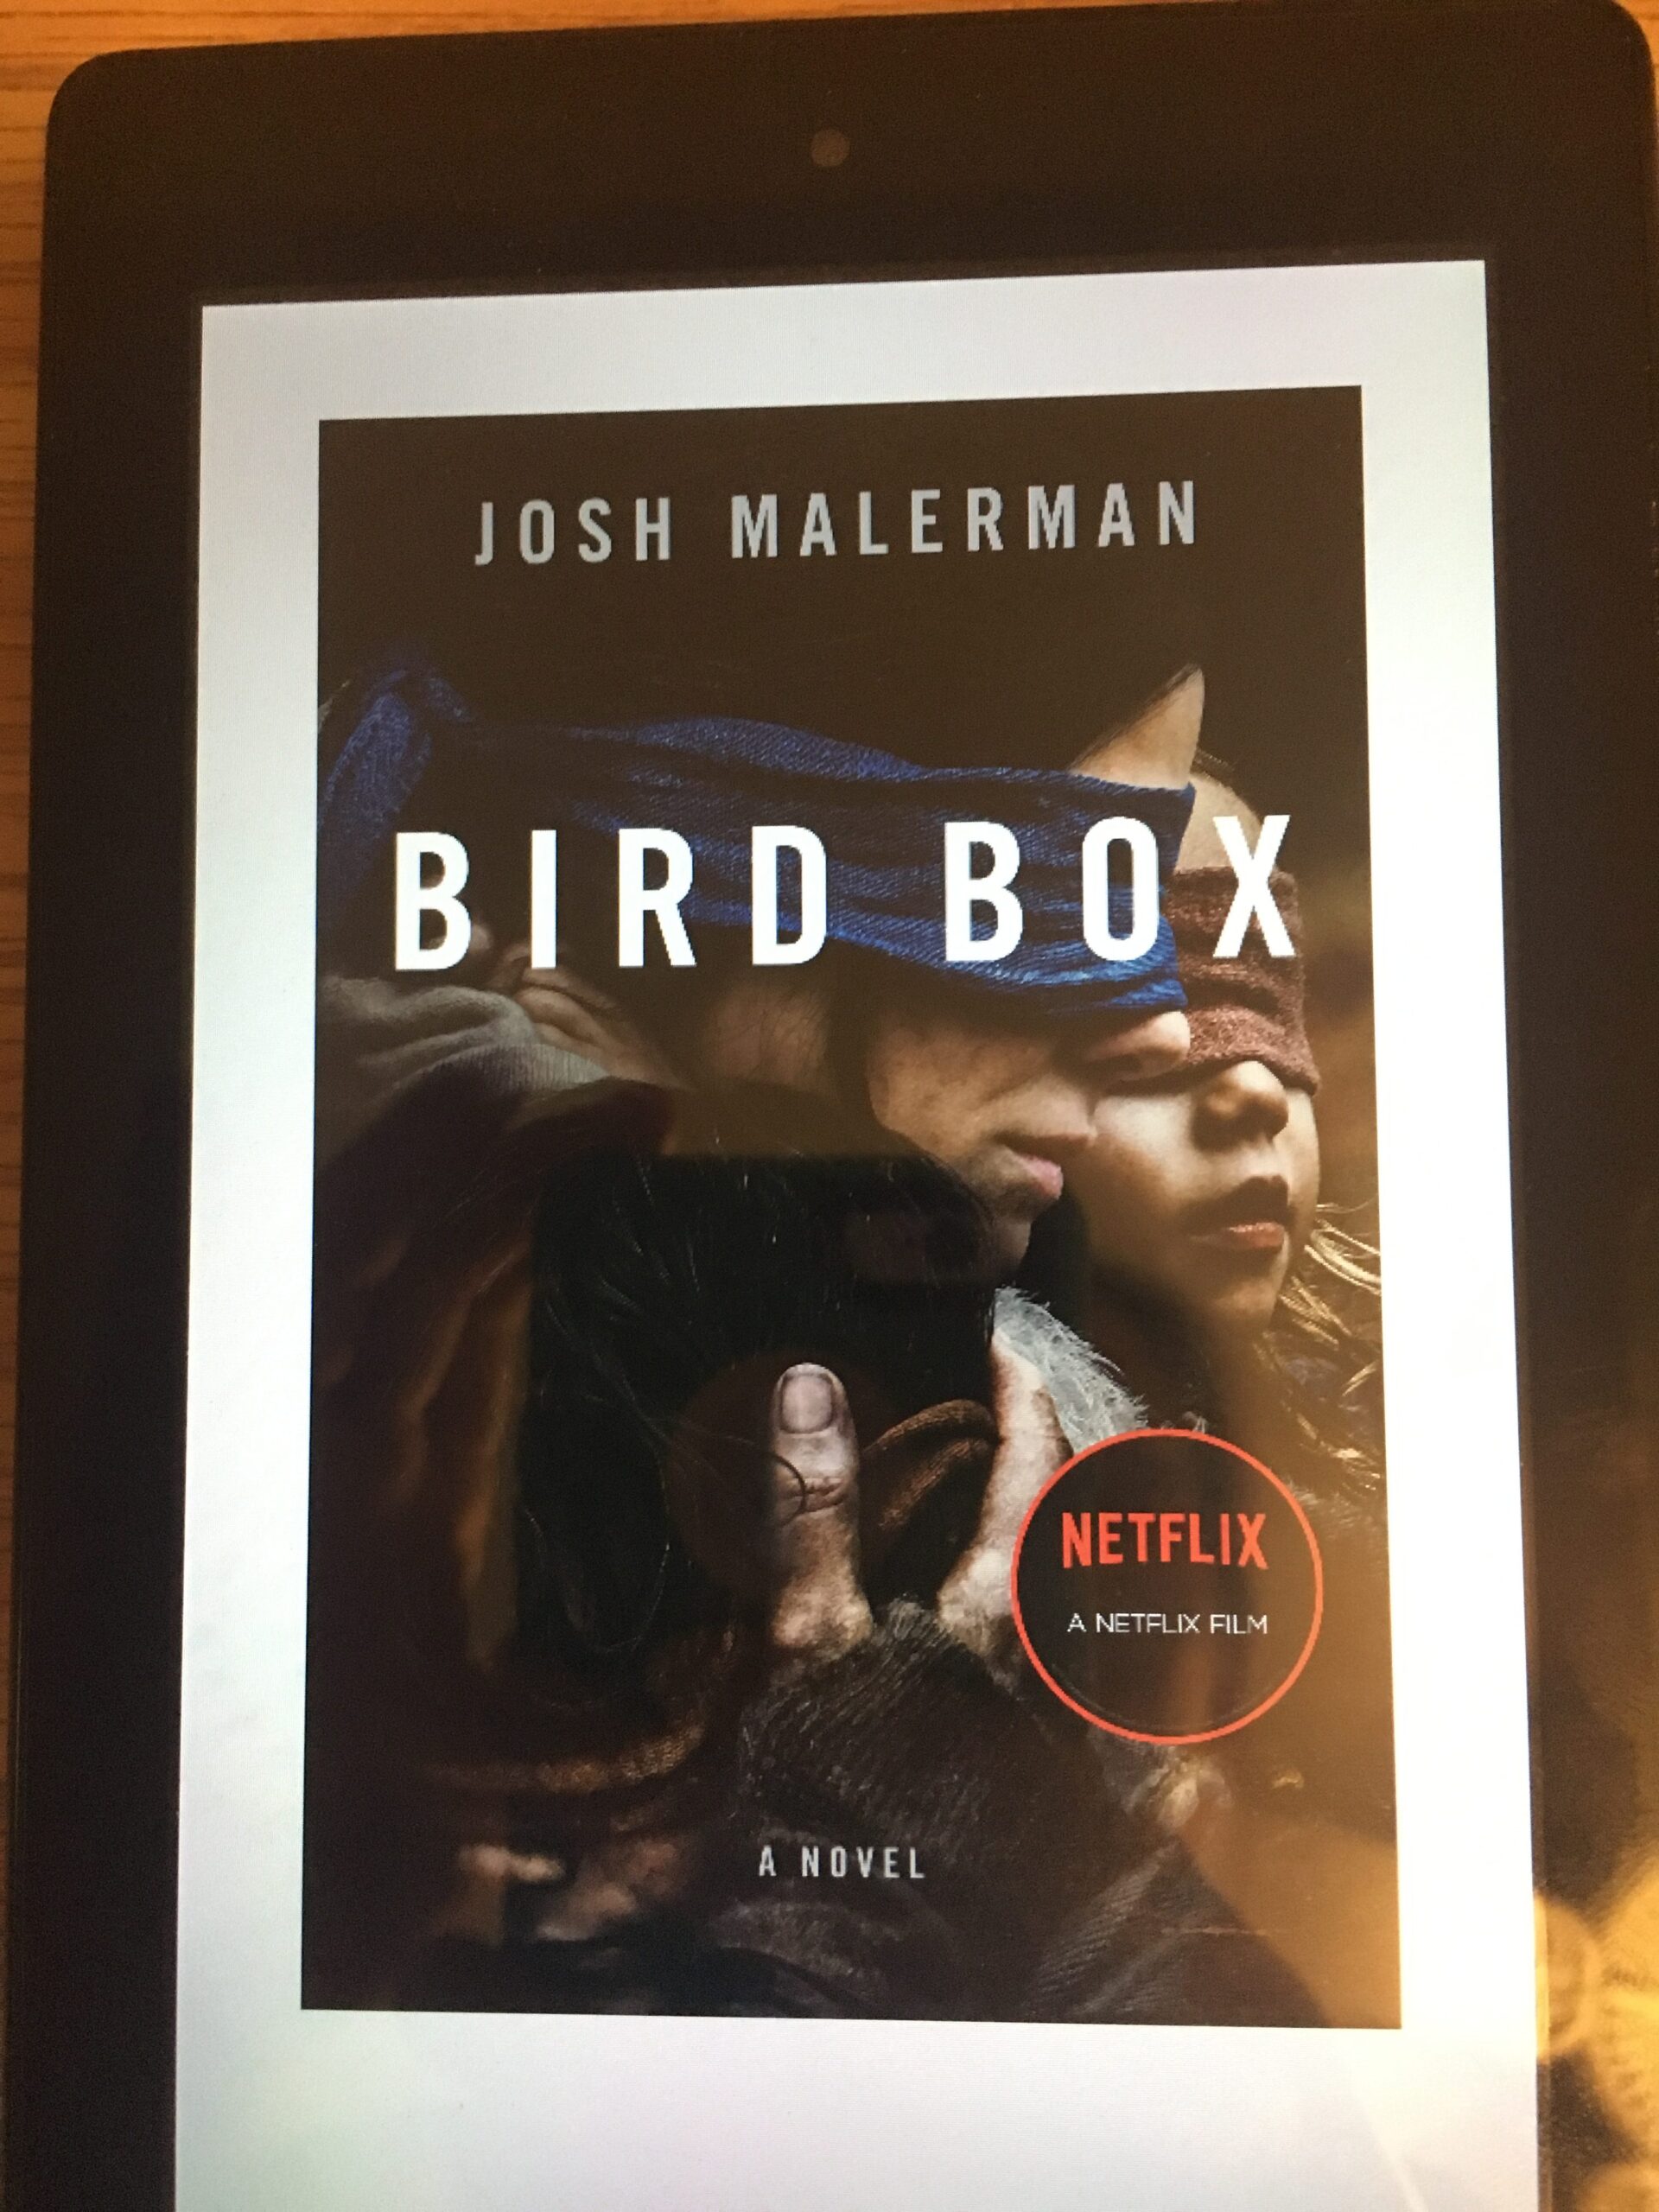 Bird Box by Josh Malerman book cover on an ereader screen